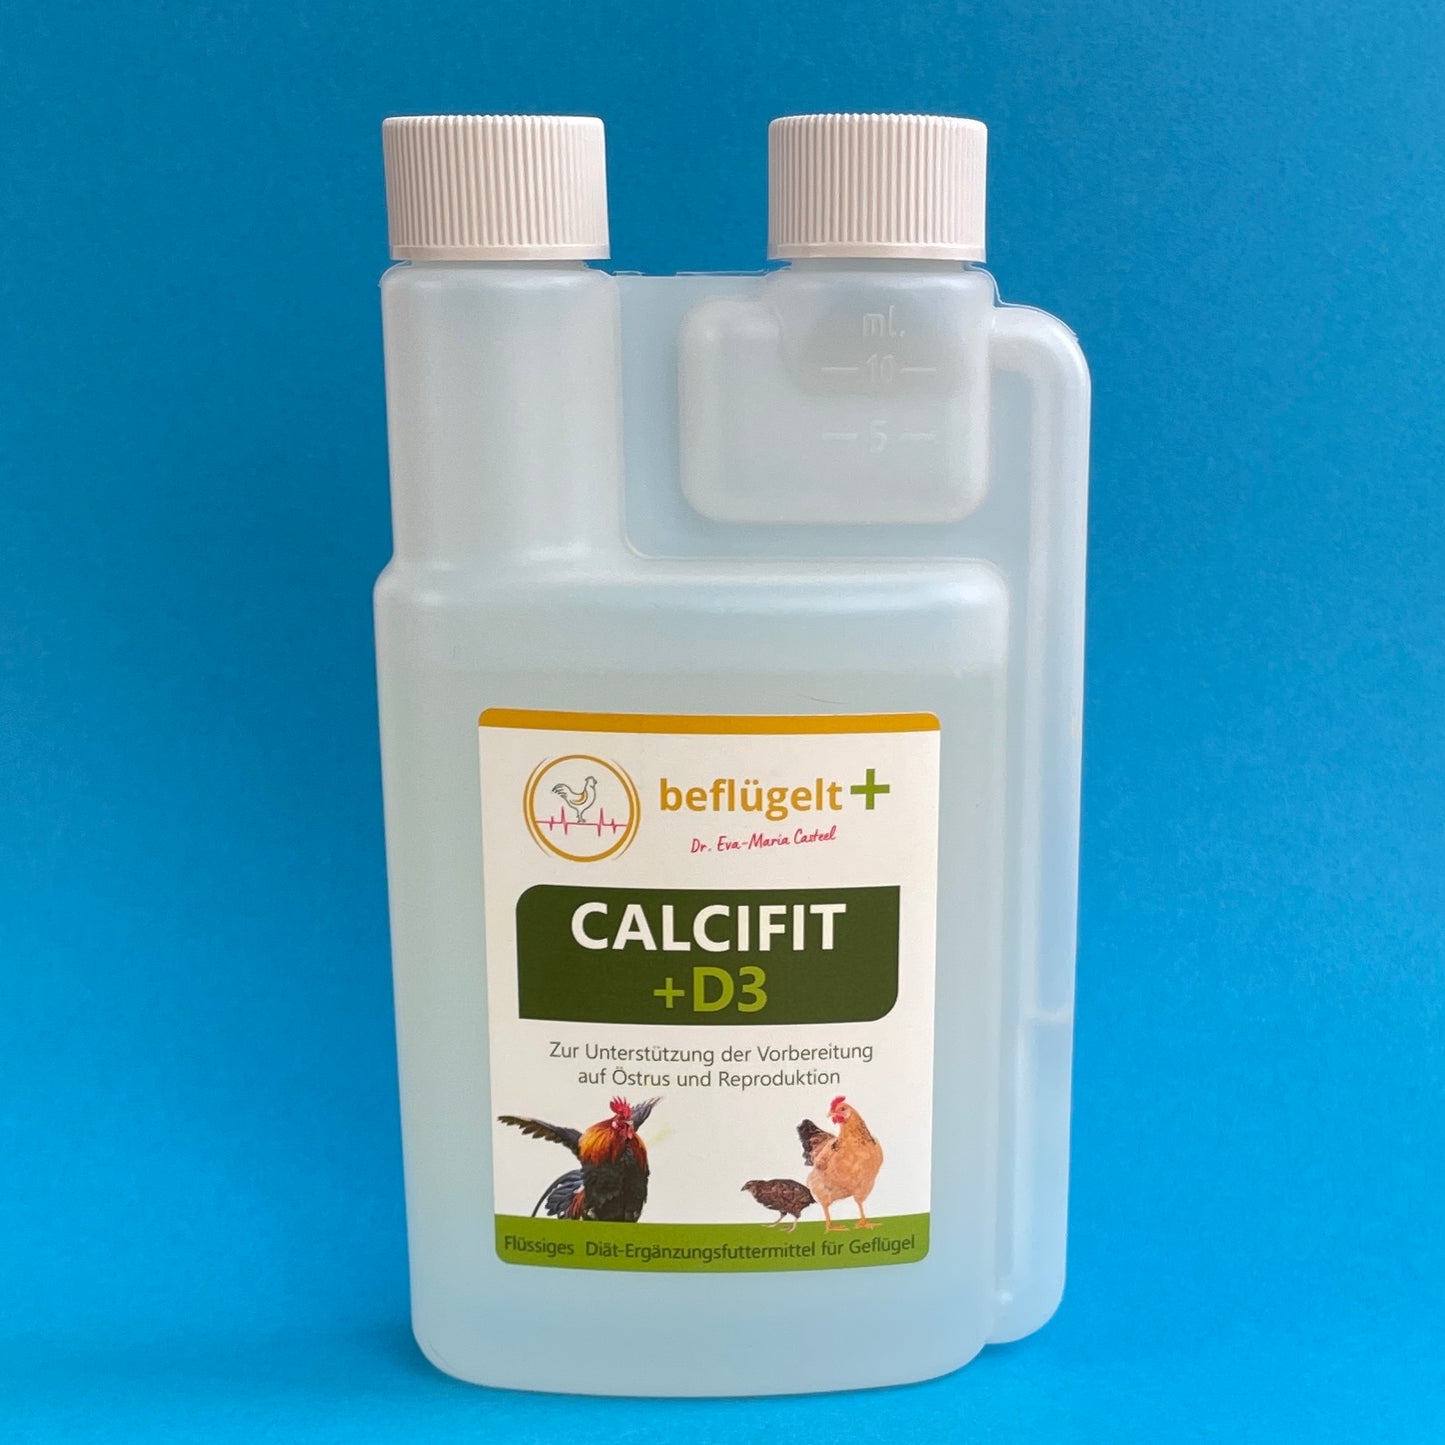 Calcifit + D3 I beflügelt + ®